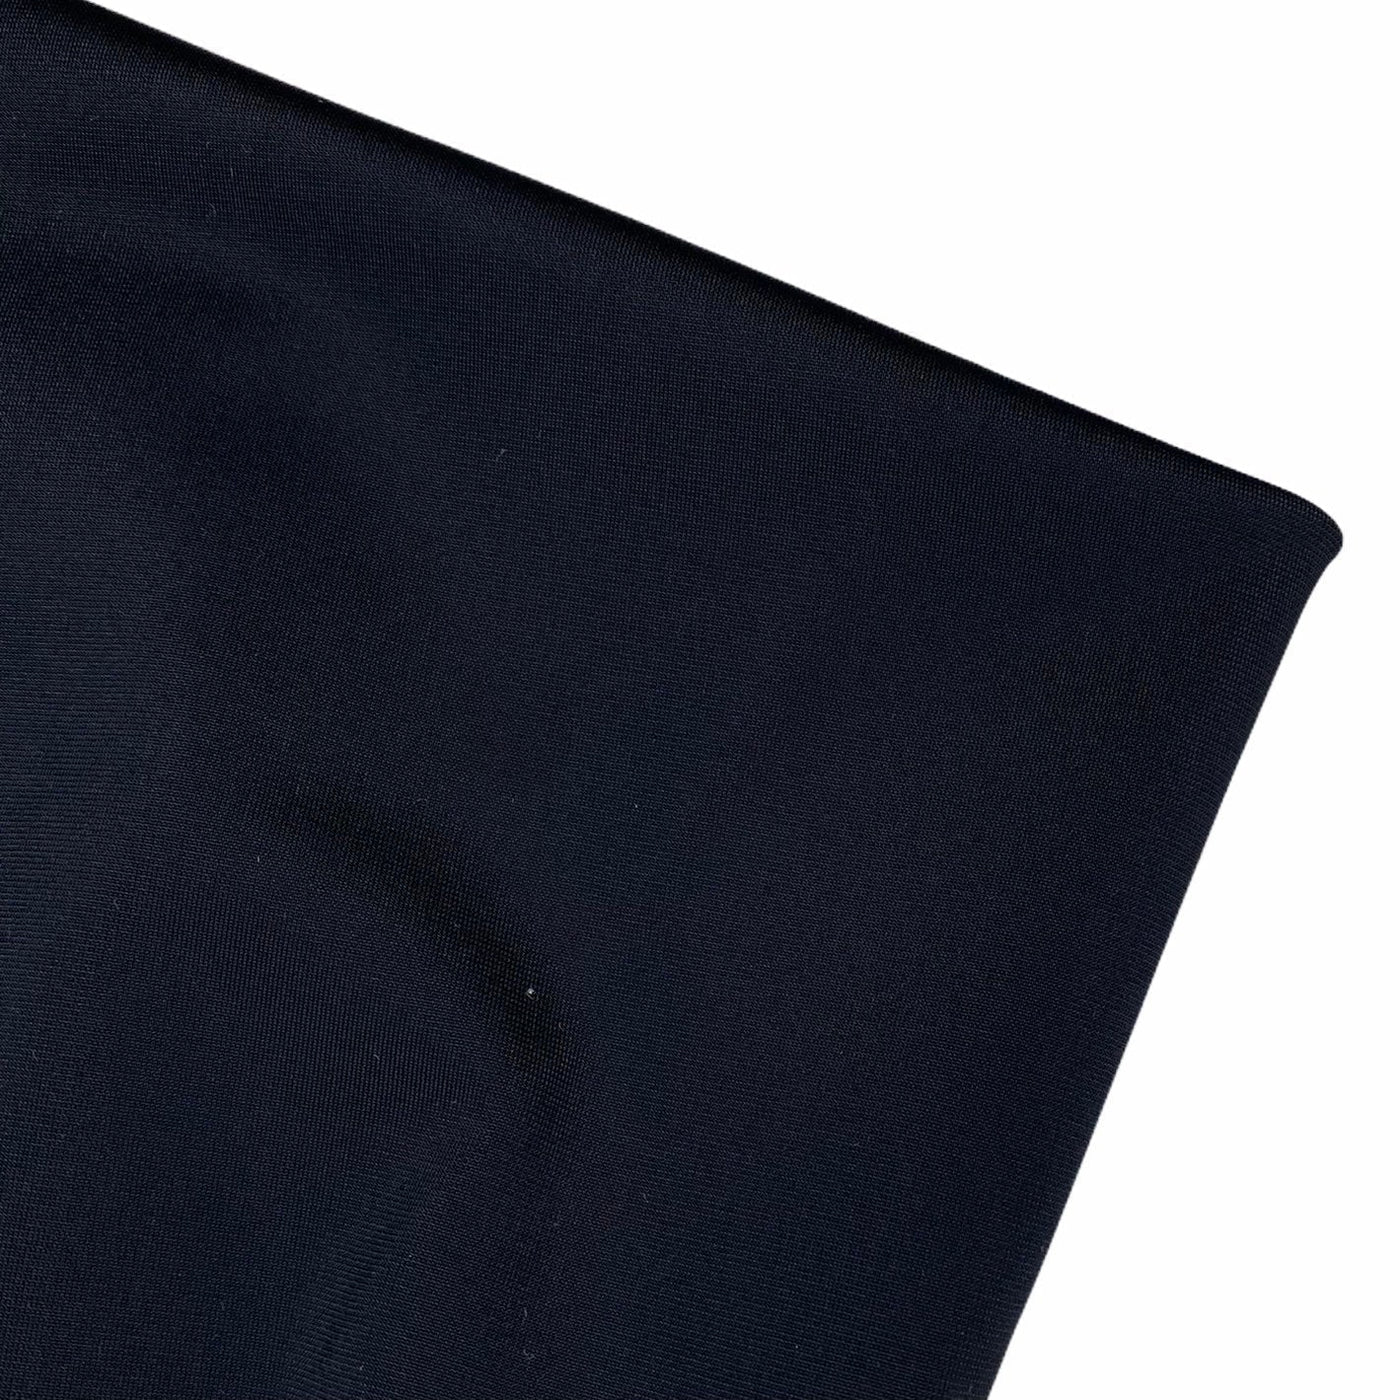 Black 4-Way Stretch Nylon Spandex Fabric by The Yard 